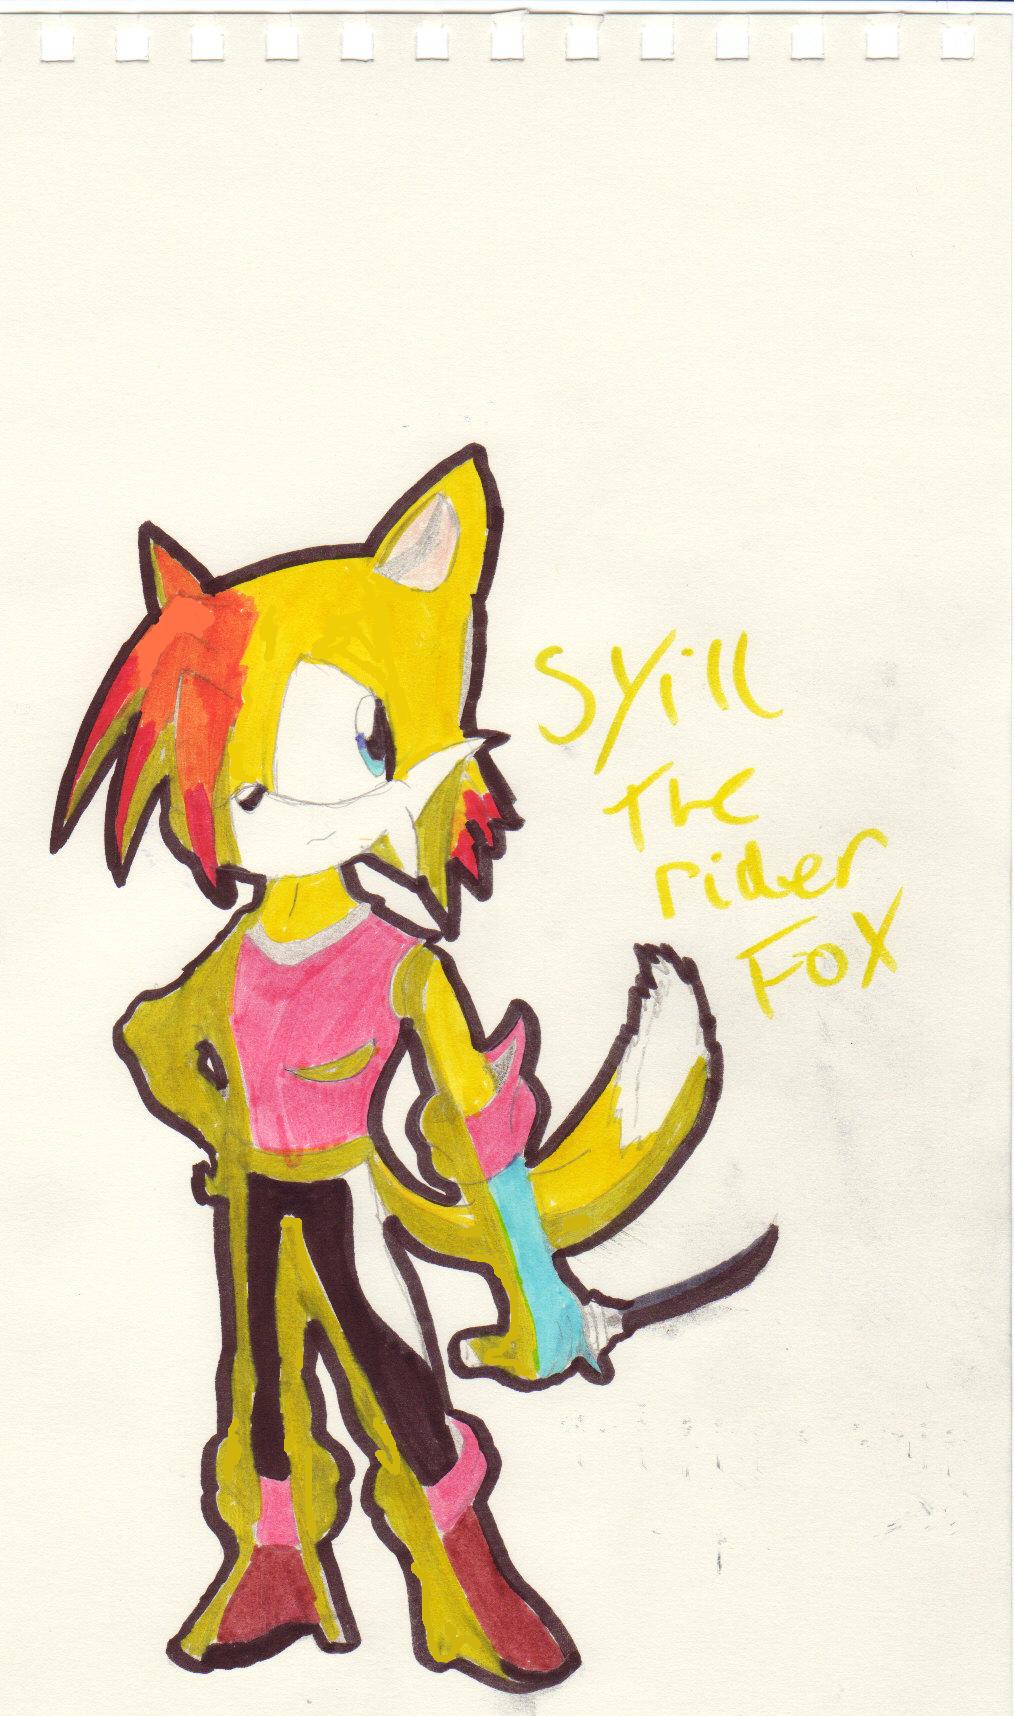 syill the rider fox by shadow_zero222